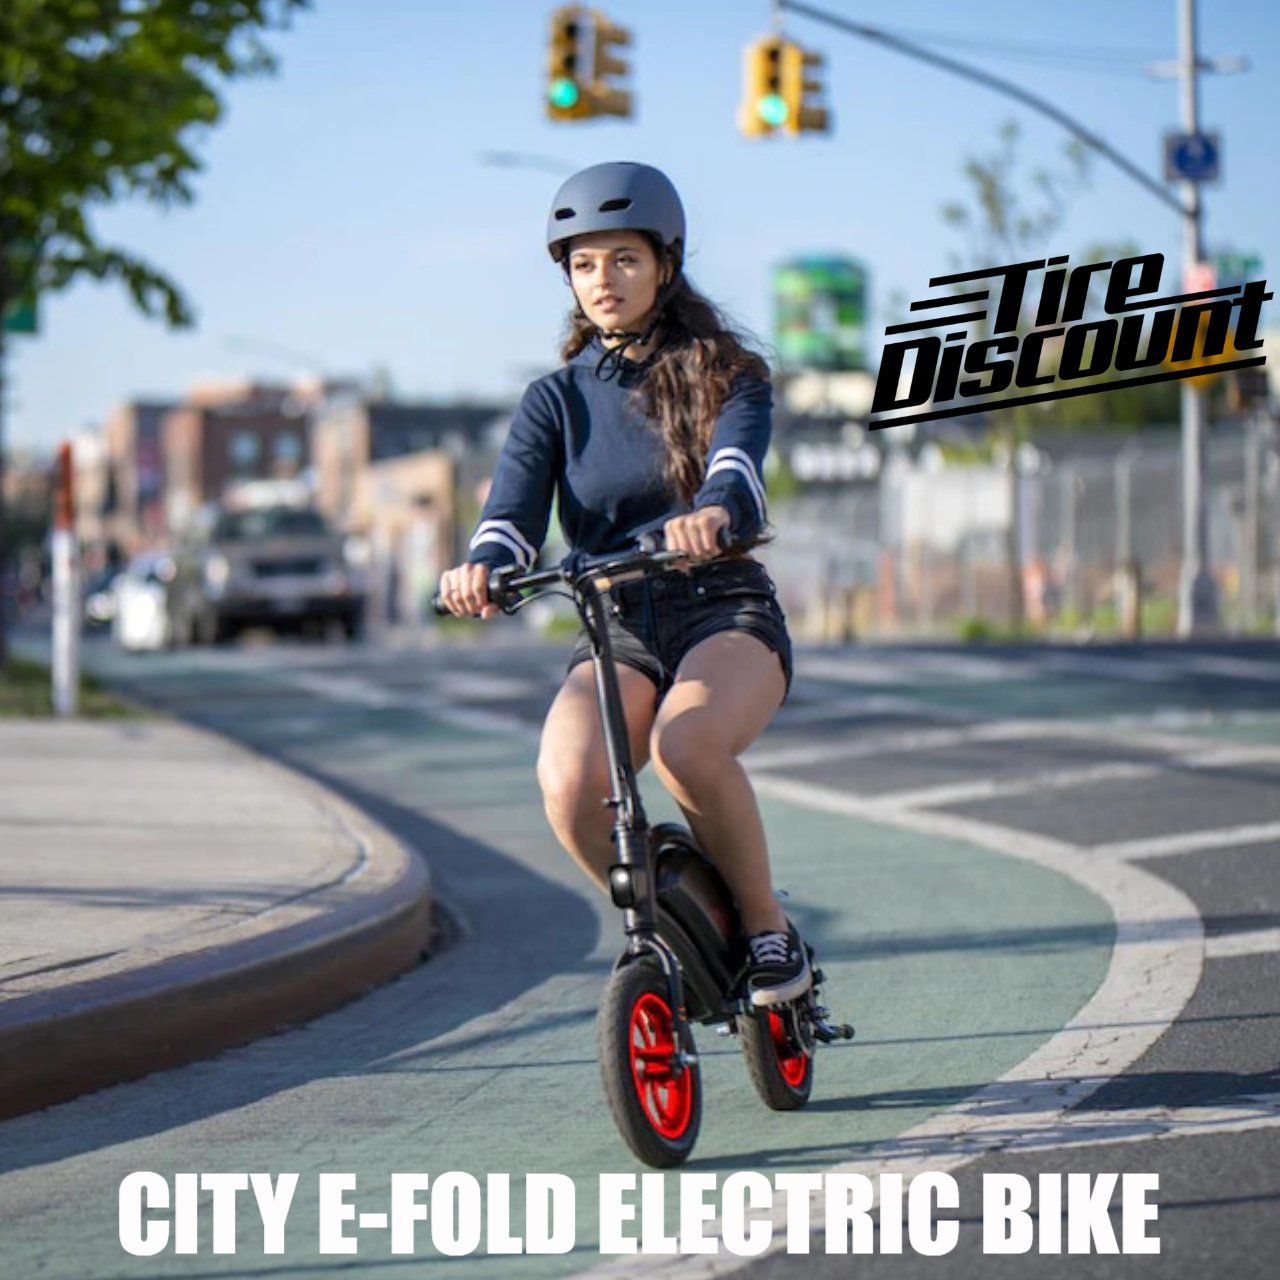 a woman is riding a city e-fold electric bike